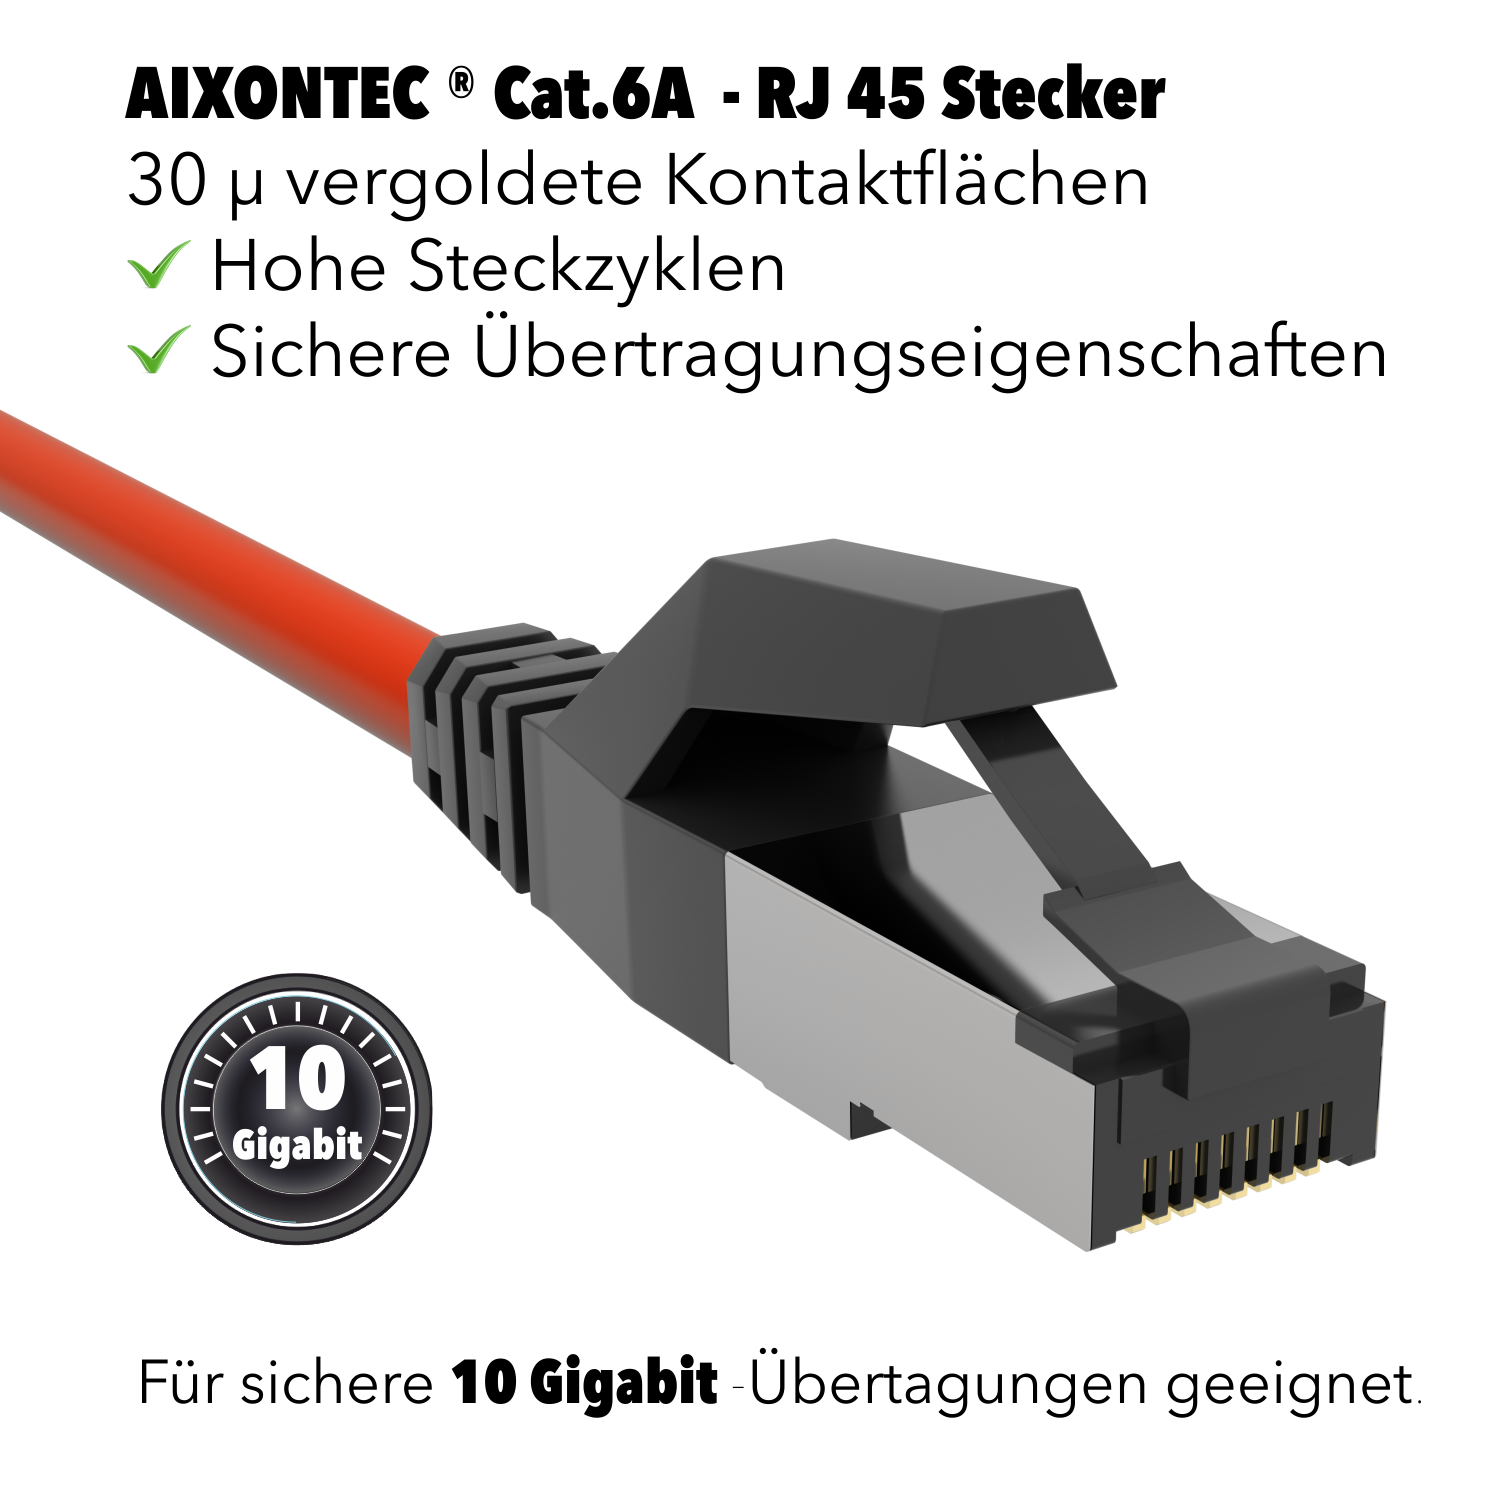 AIXONTEC 35,0m Outdoor Gigabit, Lankabel m 35,0 RJ45 Ethernetkabel 10 Netzwerkkabel, UV-Beständig